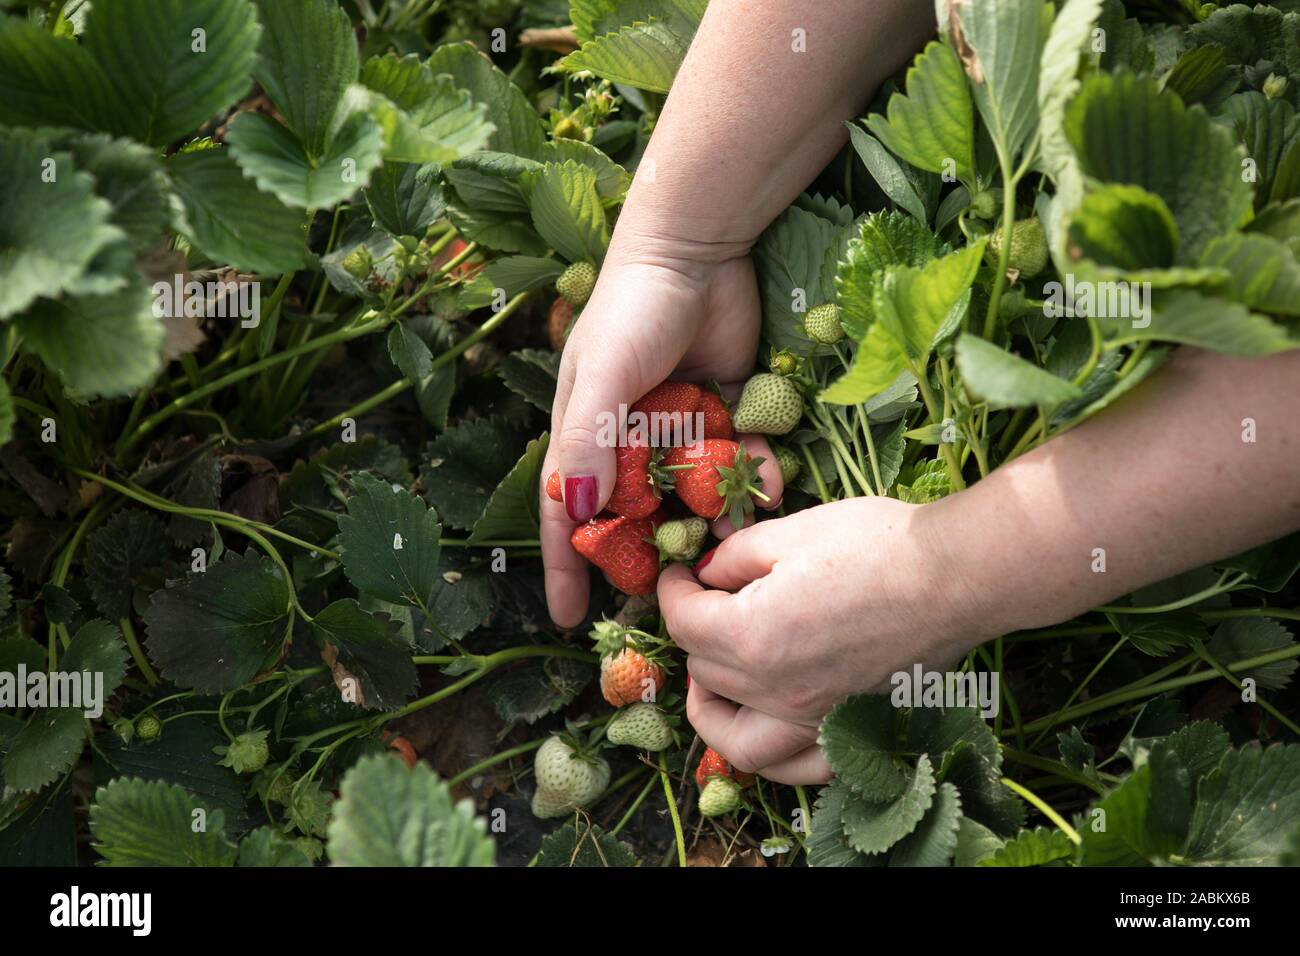 Ein Arbeiter nimmt reife Erdbeeren. [Automatisierte Übersetzung] Stockfoto